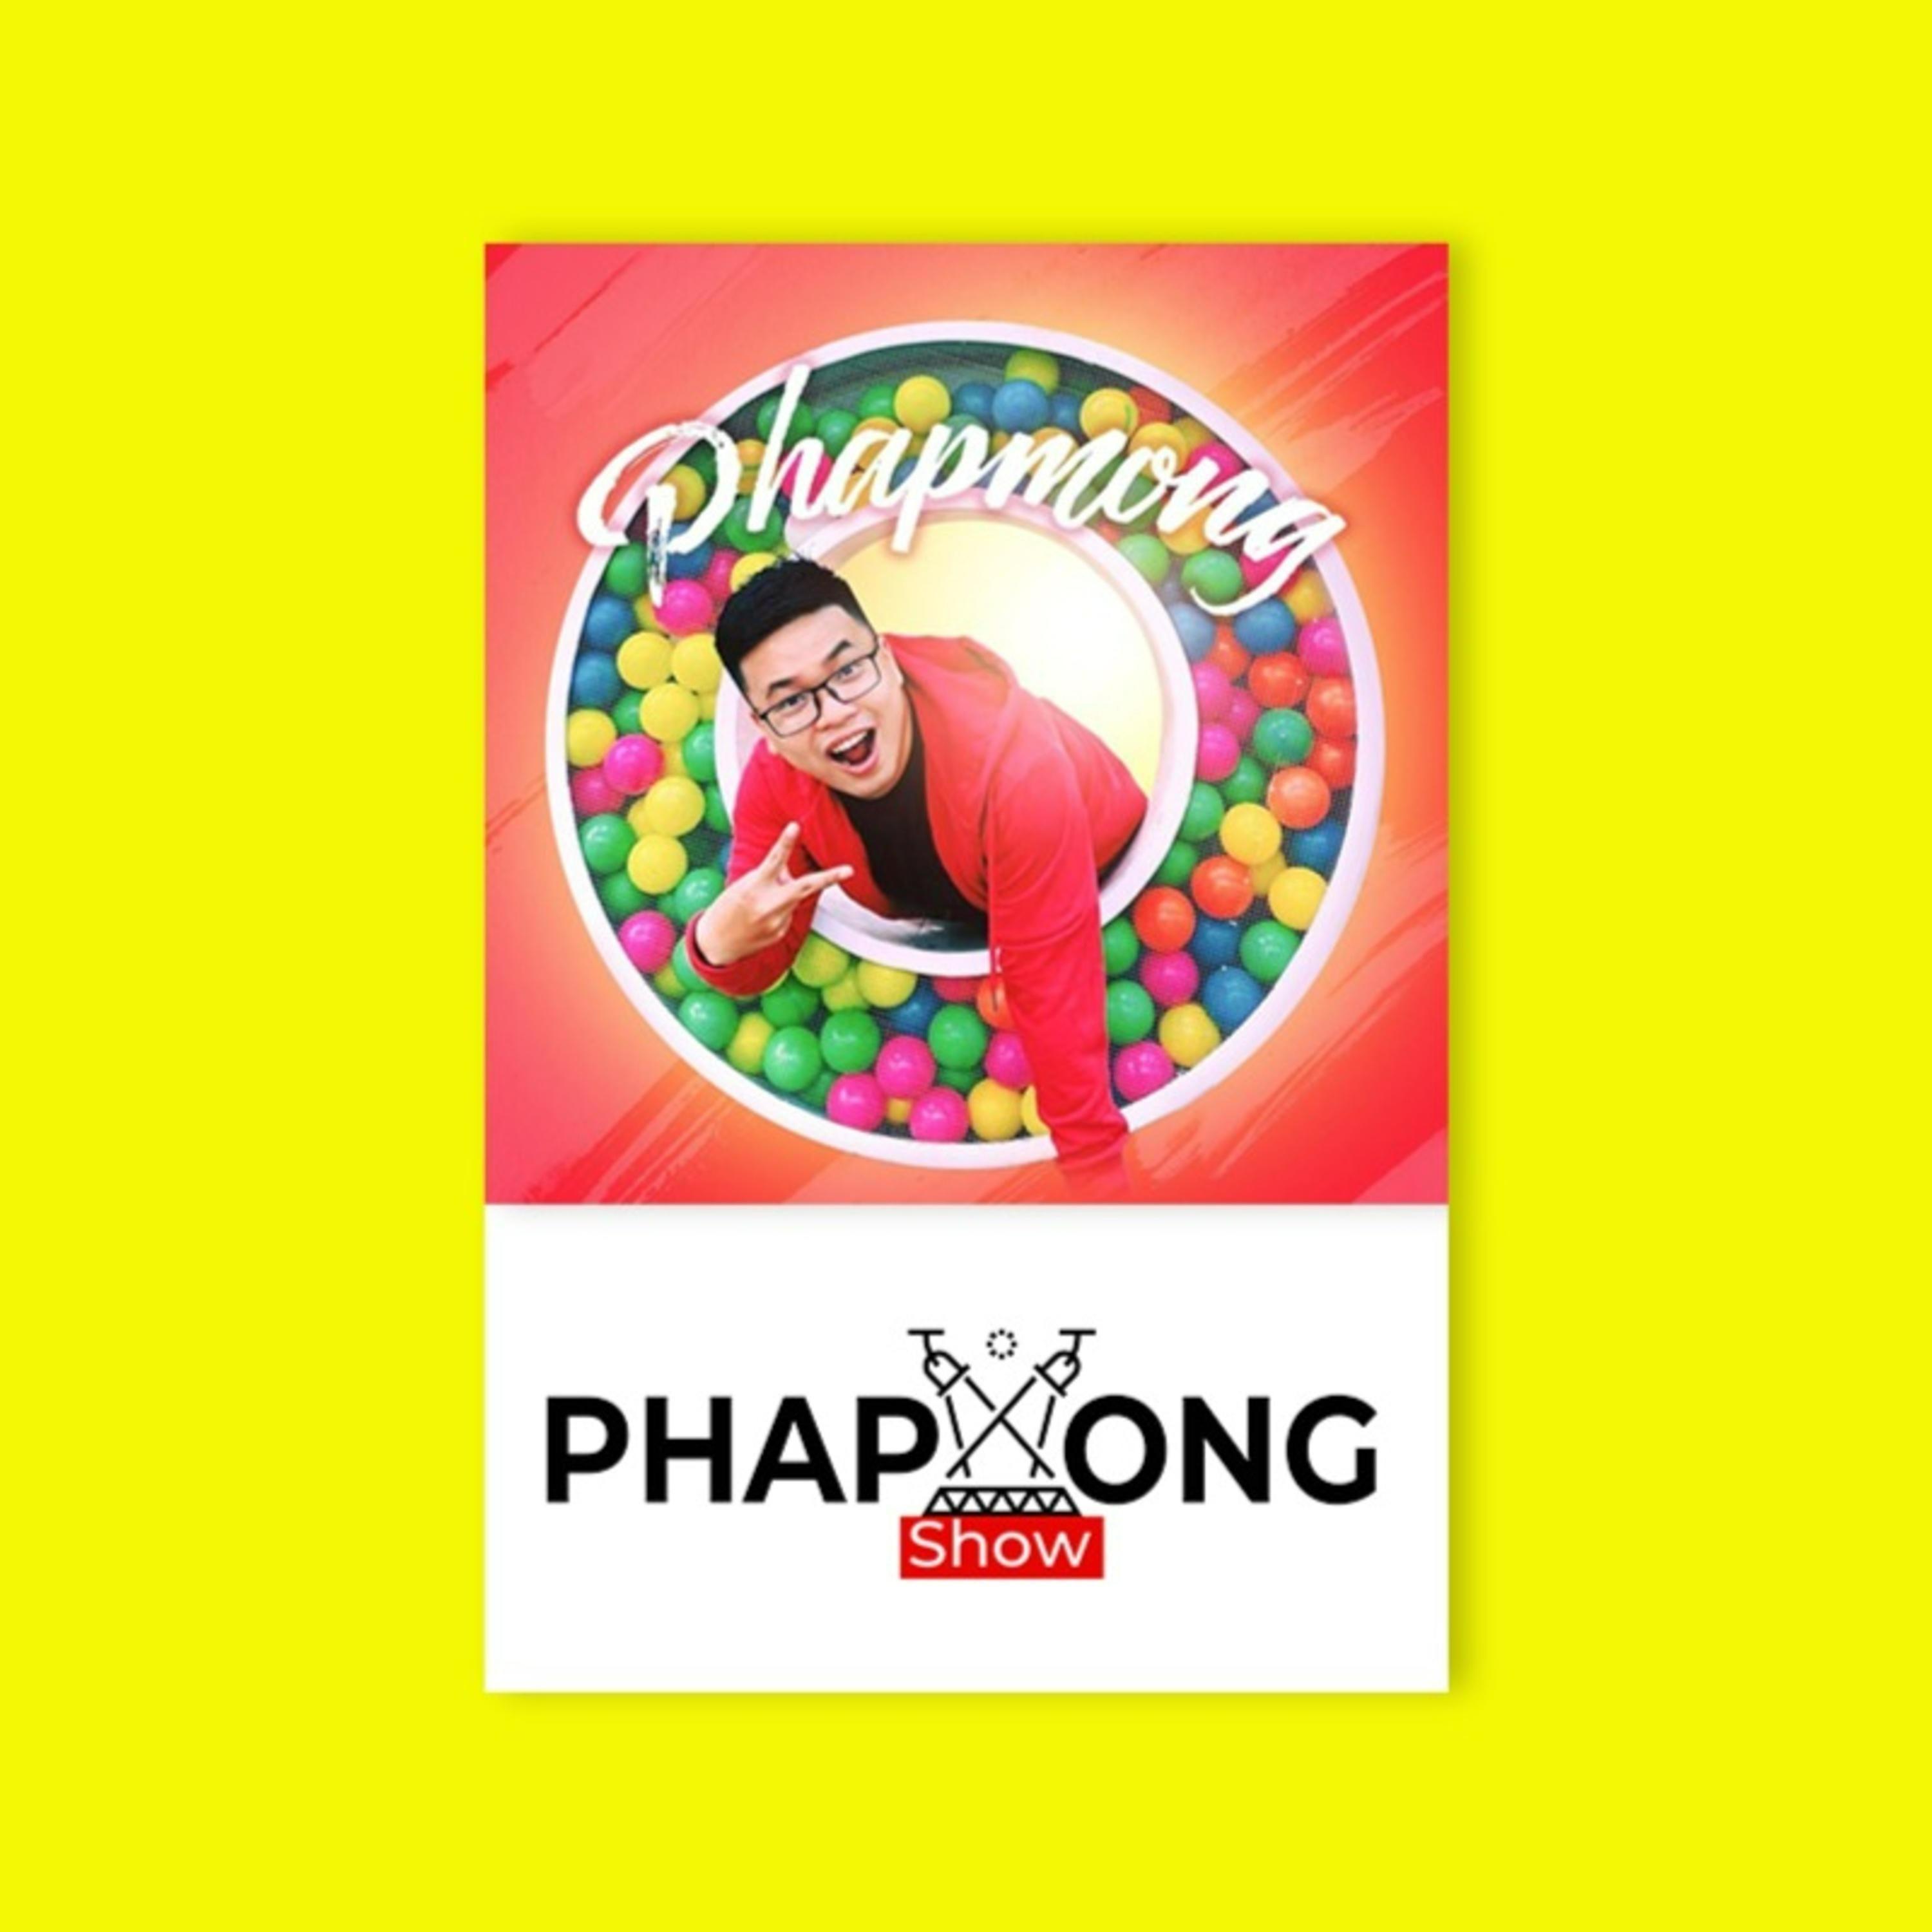 PHAPMONG SHOW